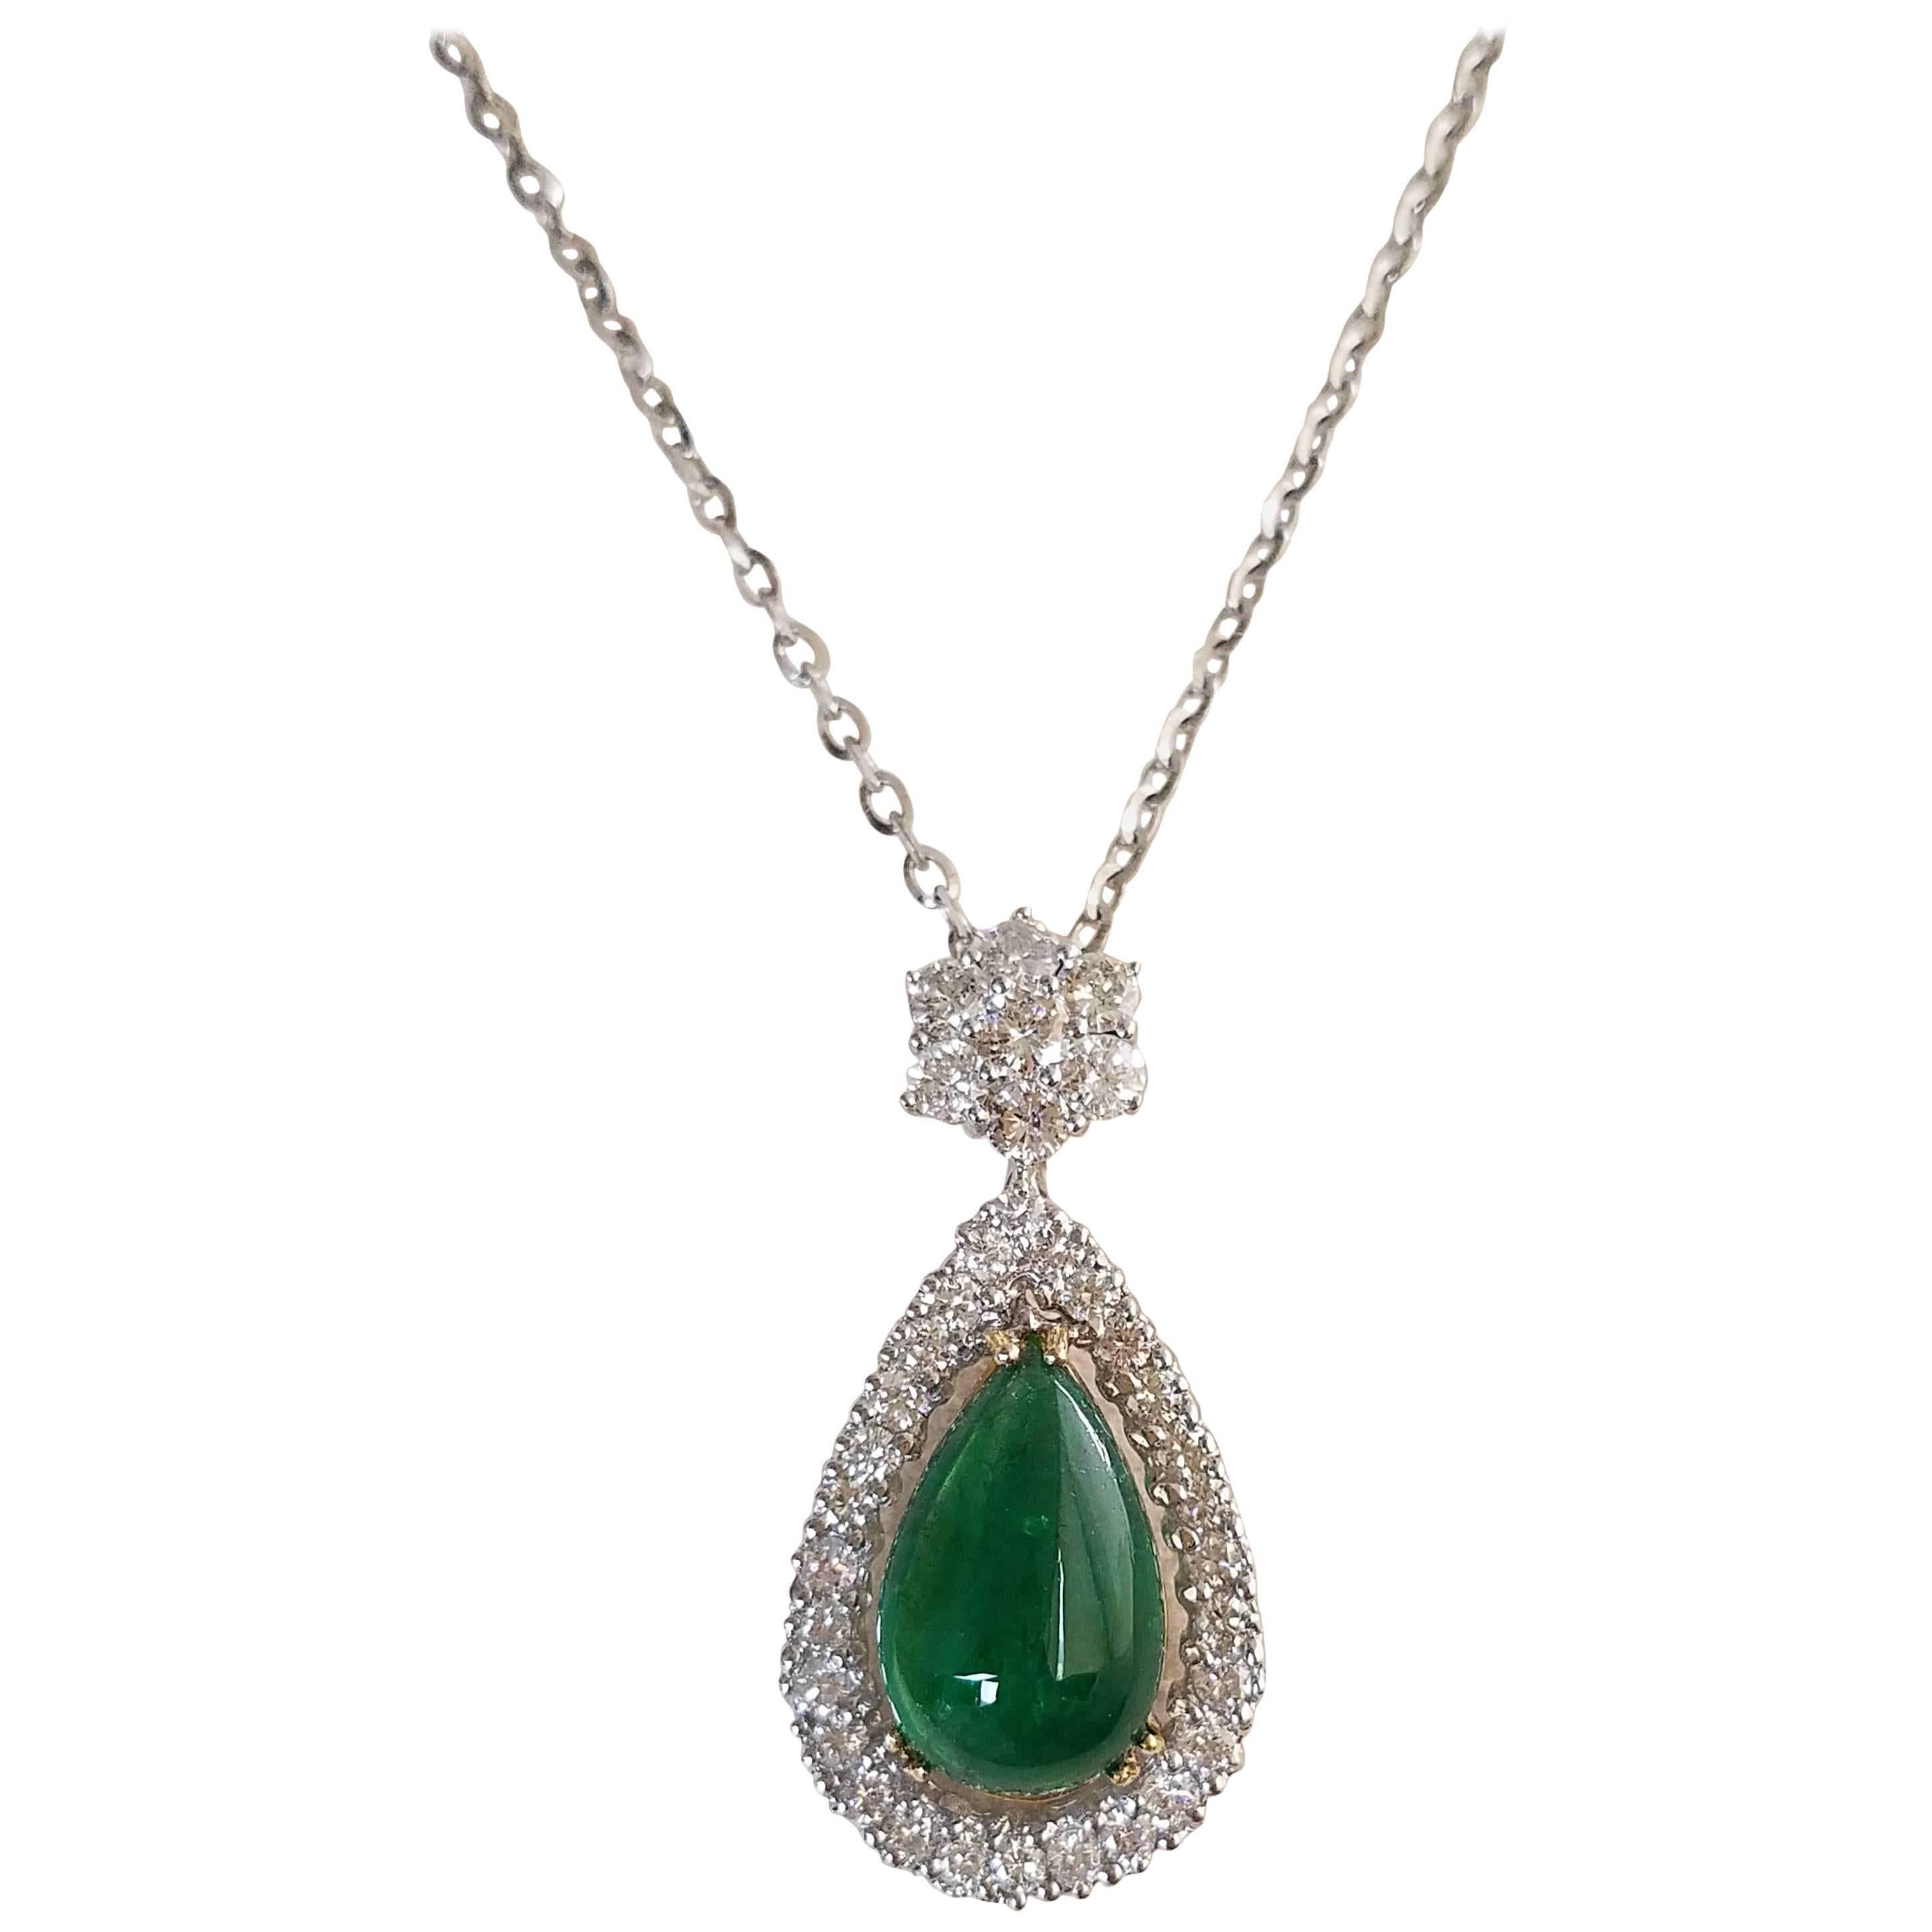 8.06 Carat Pear Shape Emerald Cabochon and Diamond Pendant